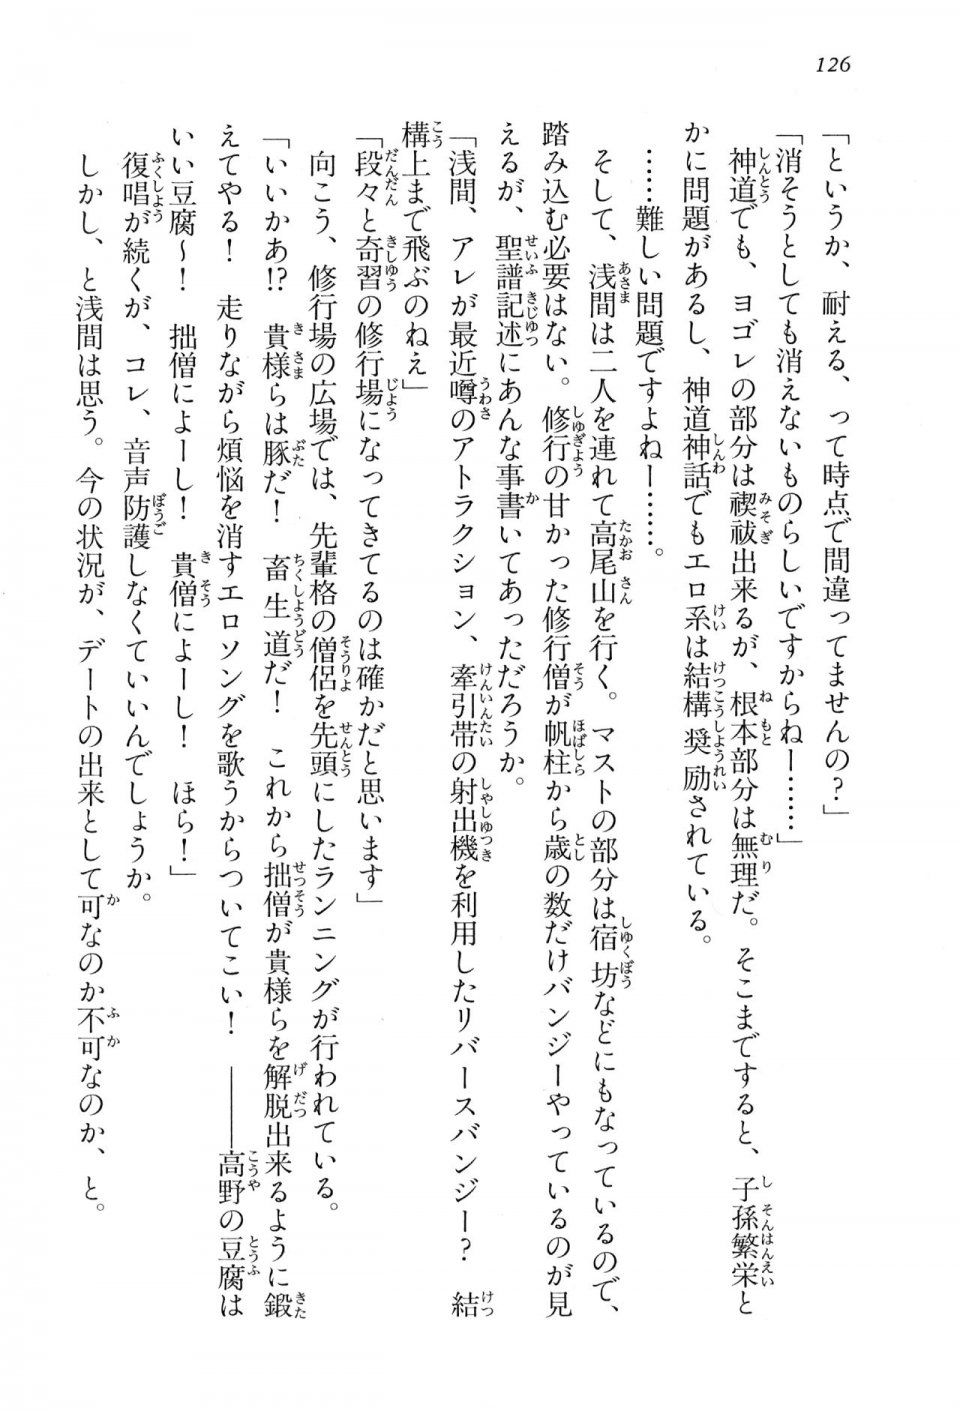 Kyoukai Senjou no Horizon BD Special Mininovel Vol 2(1B) - Photo #130